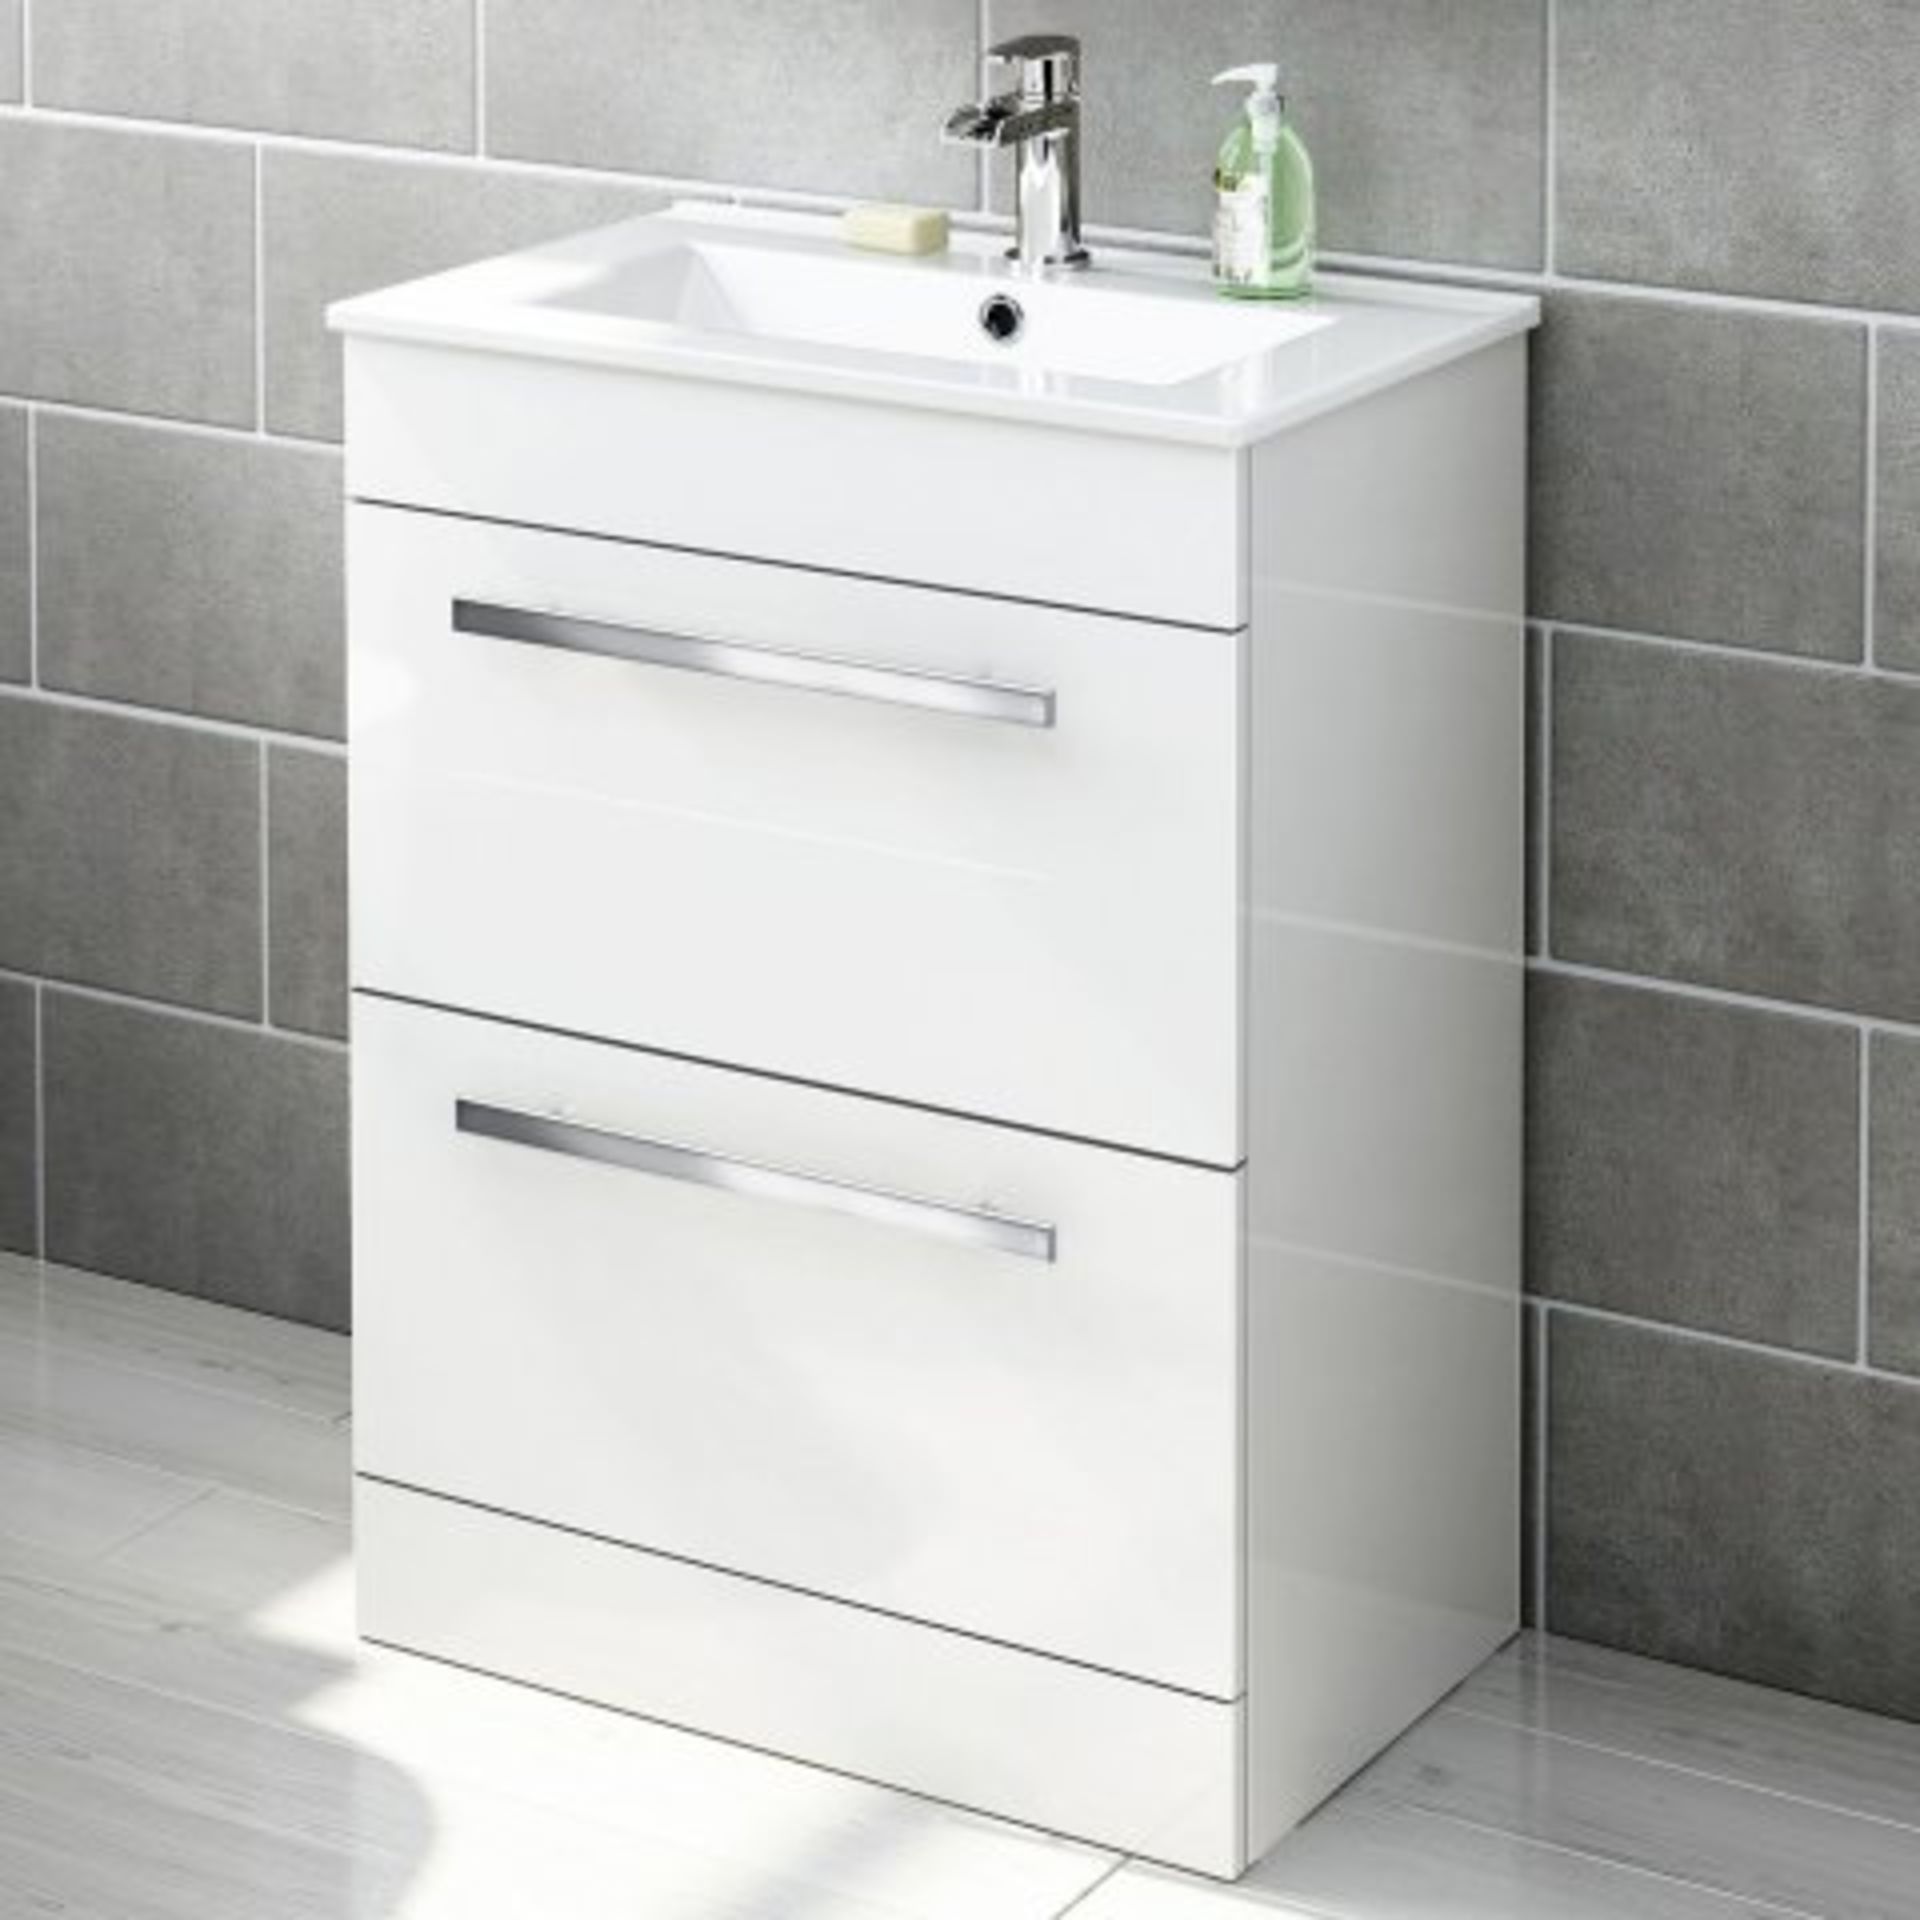 (J88) 600mm Avon High Gloss White Double Drawer Basin Cabinet - Floor Standing. RRP £499.99. COMES